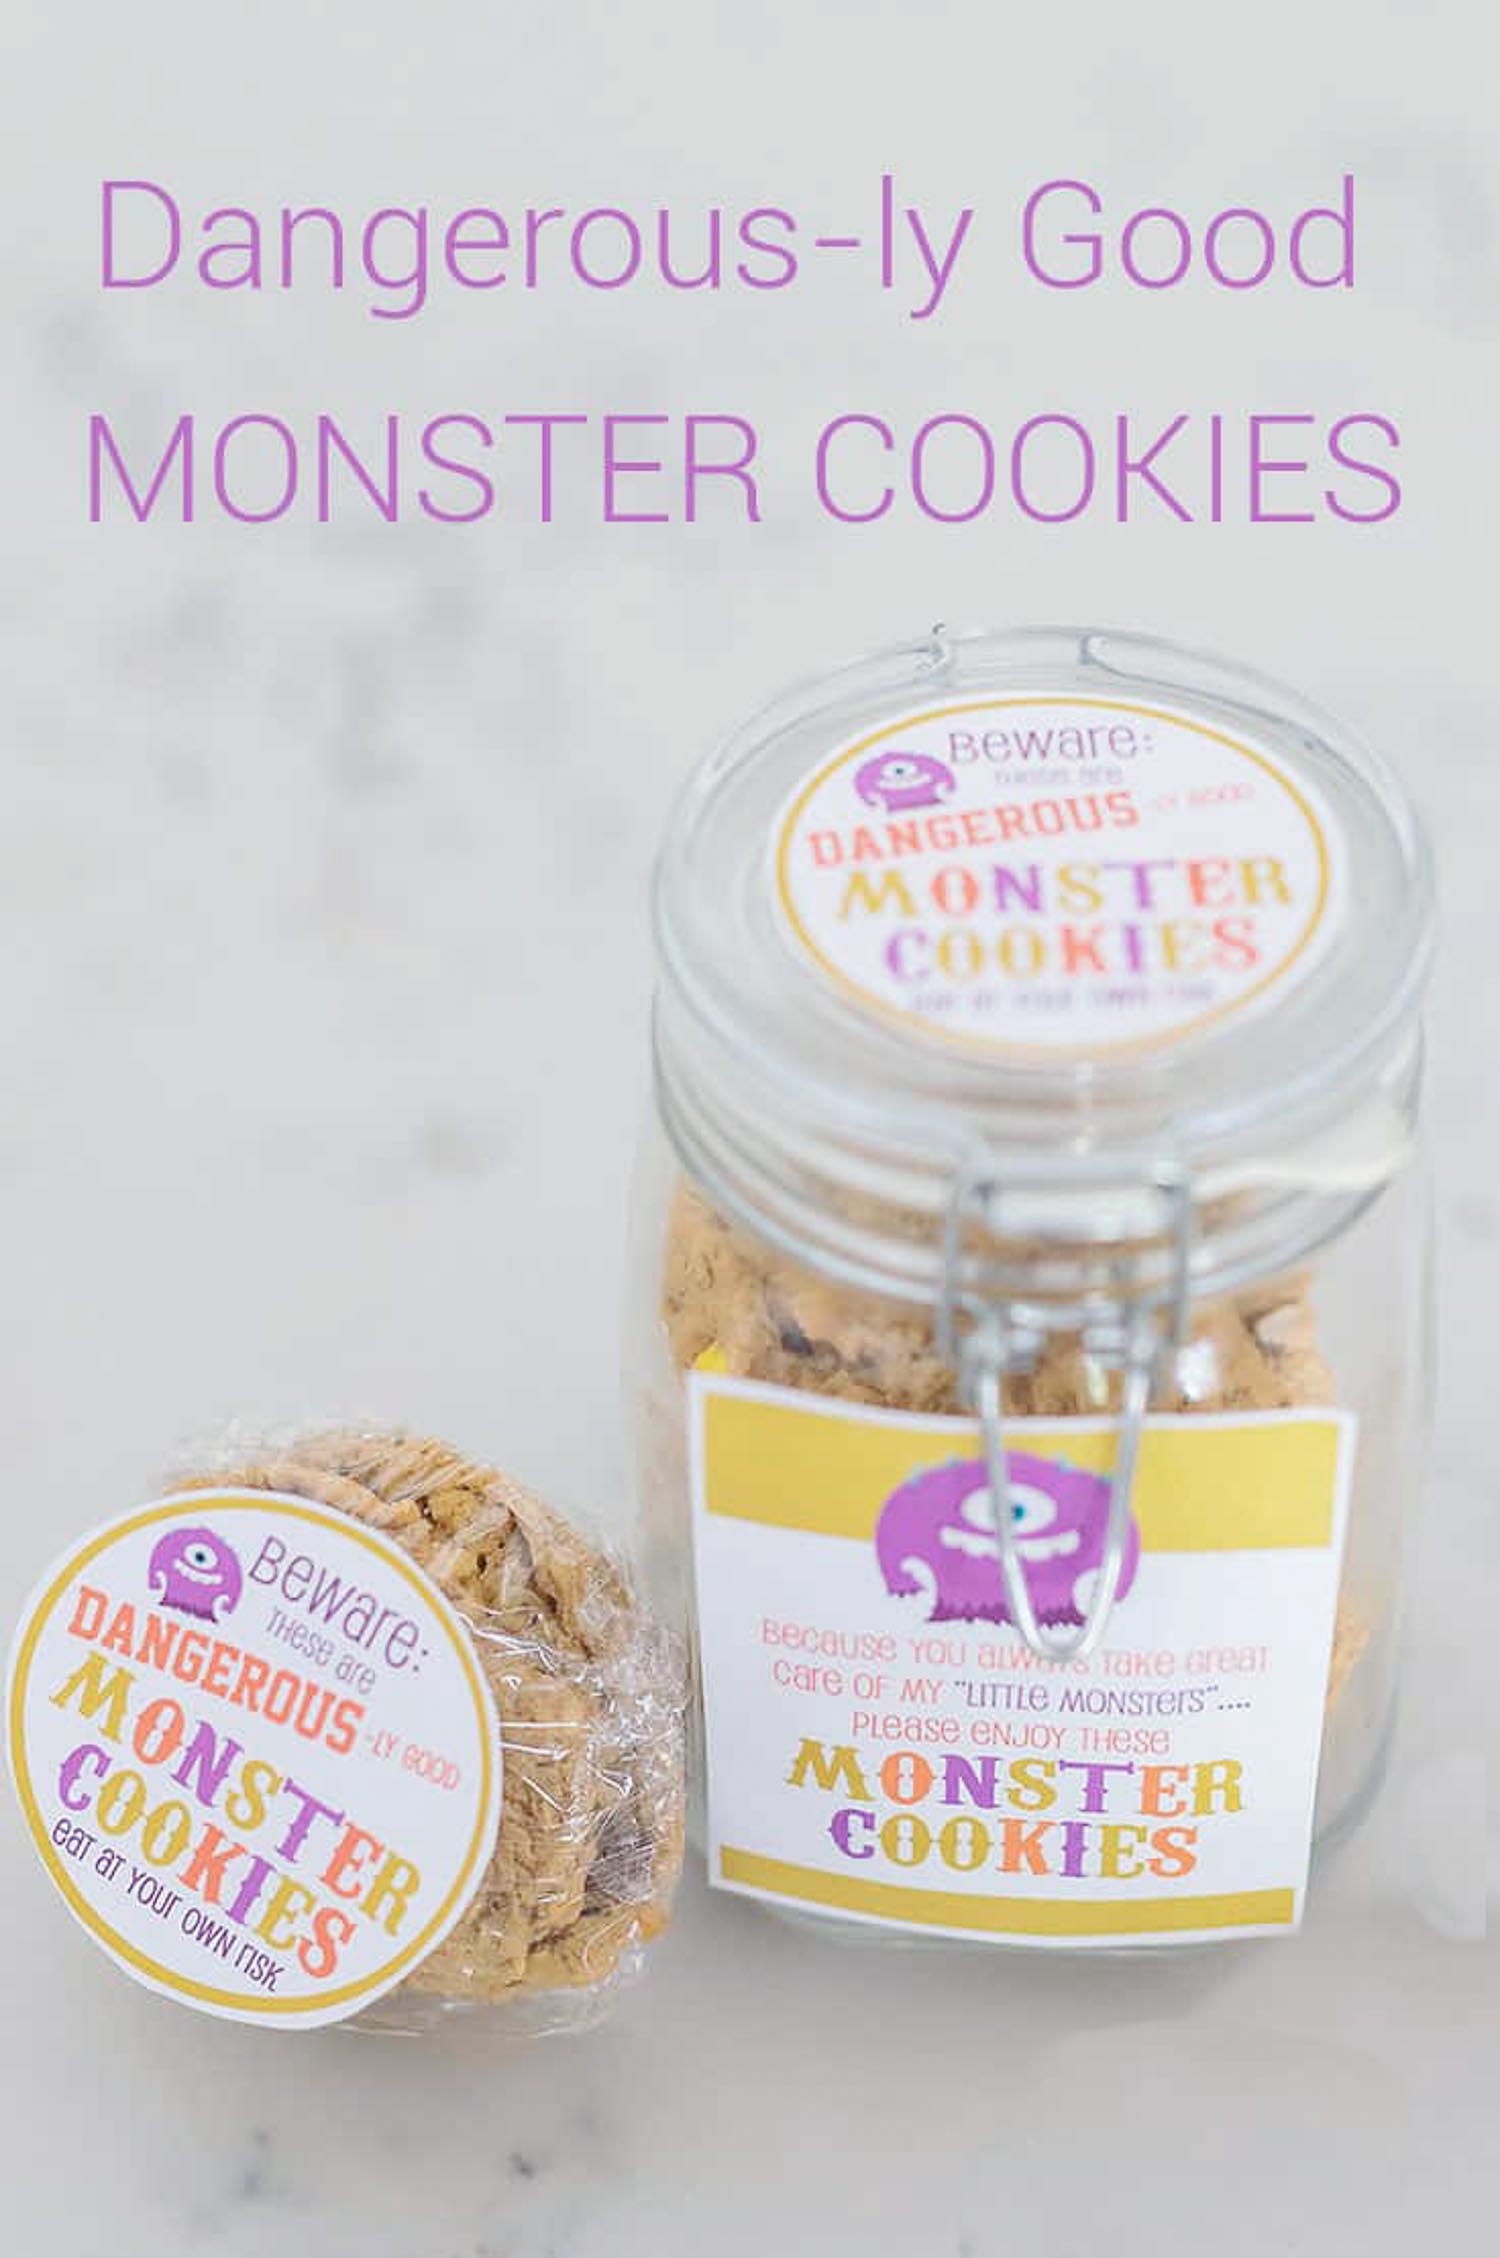 Jars of cookies with labels that warn of dangerous monster cookies.